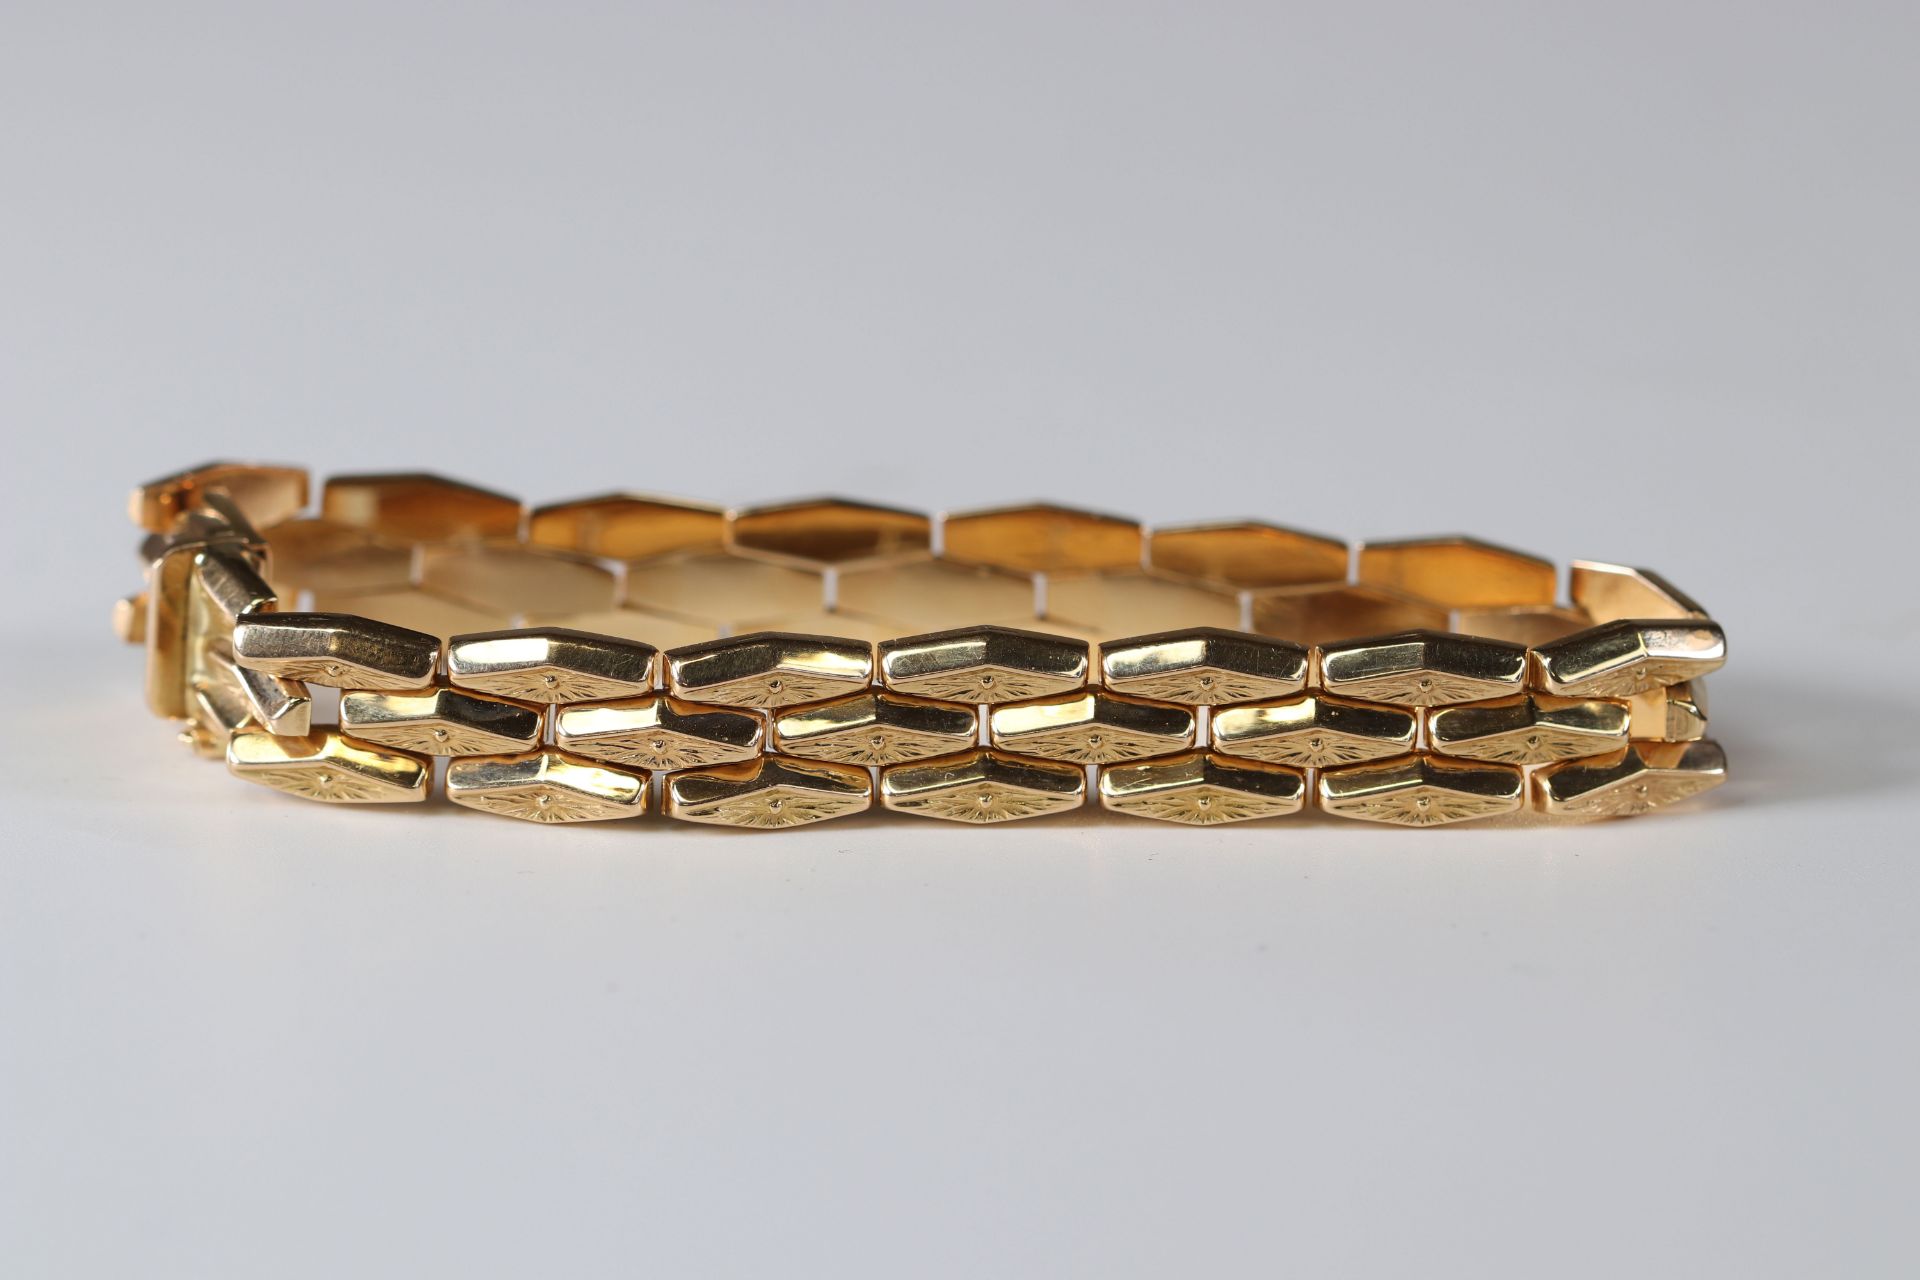 750 hallmark gold bracelet (26.4 grams)